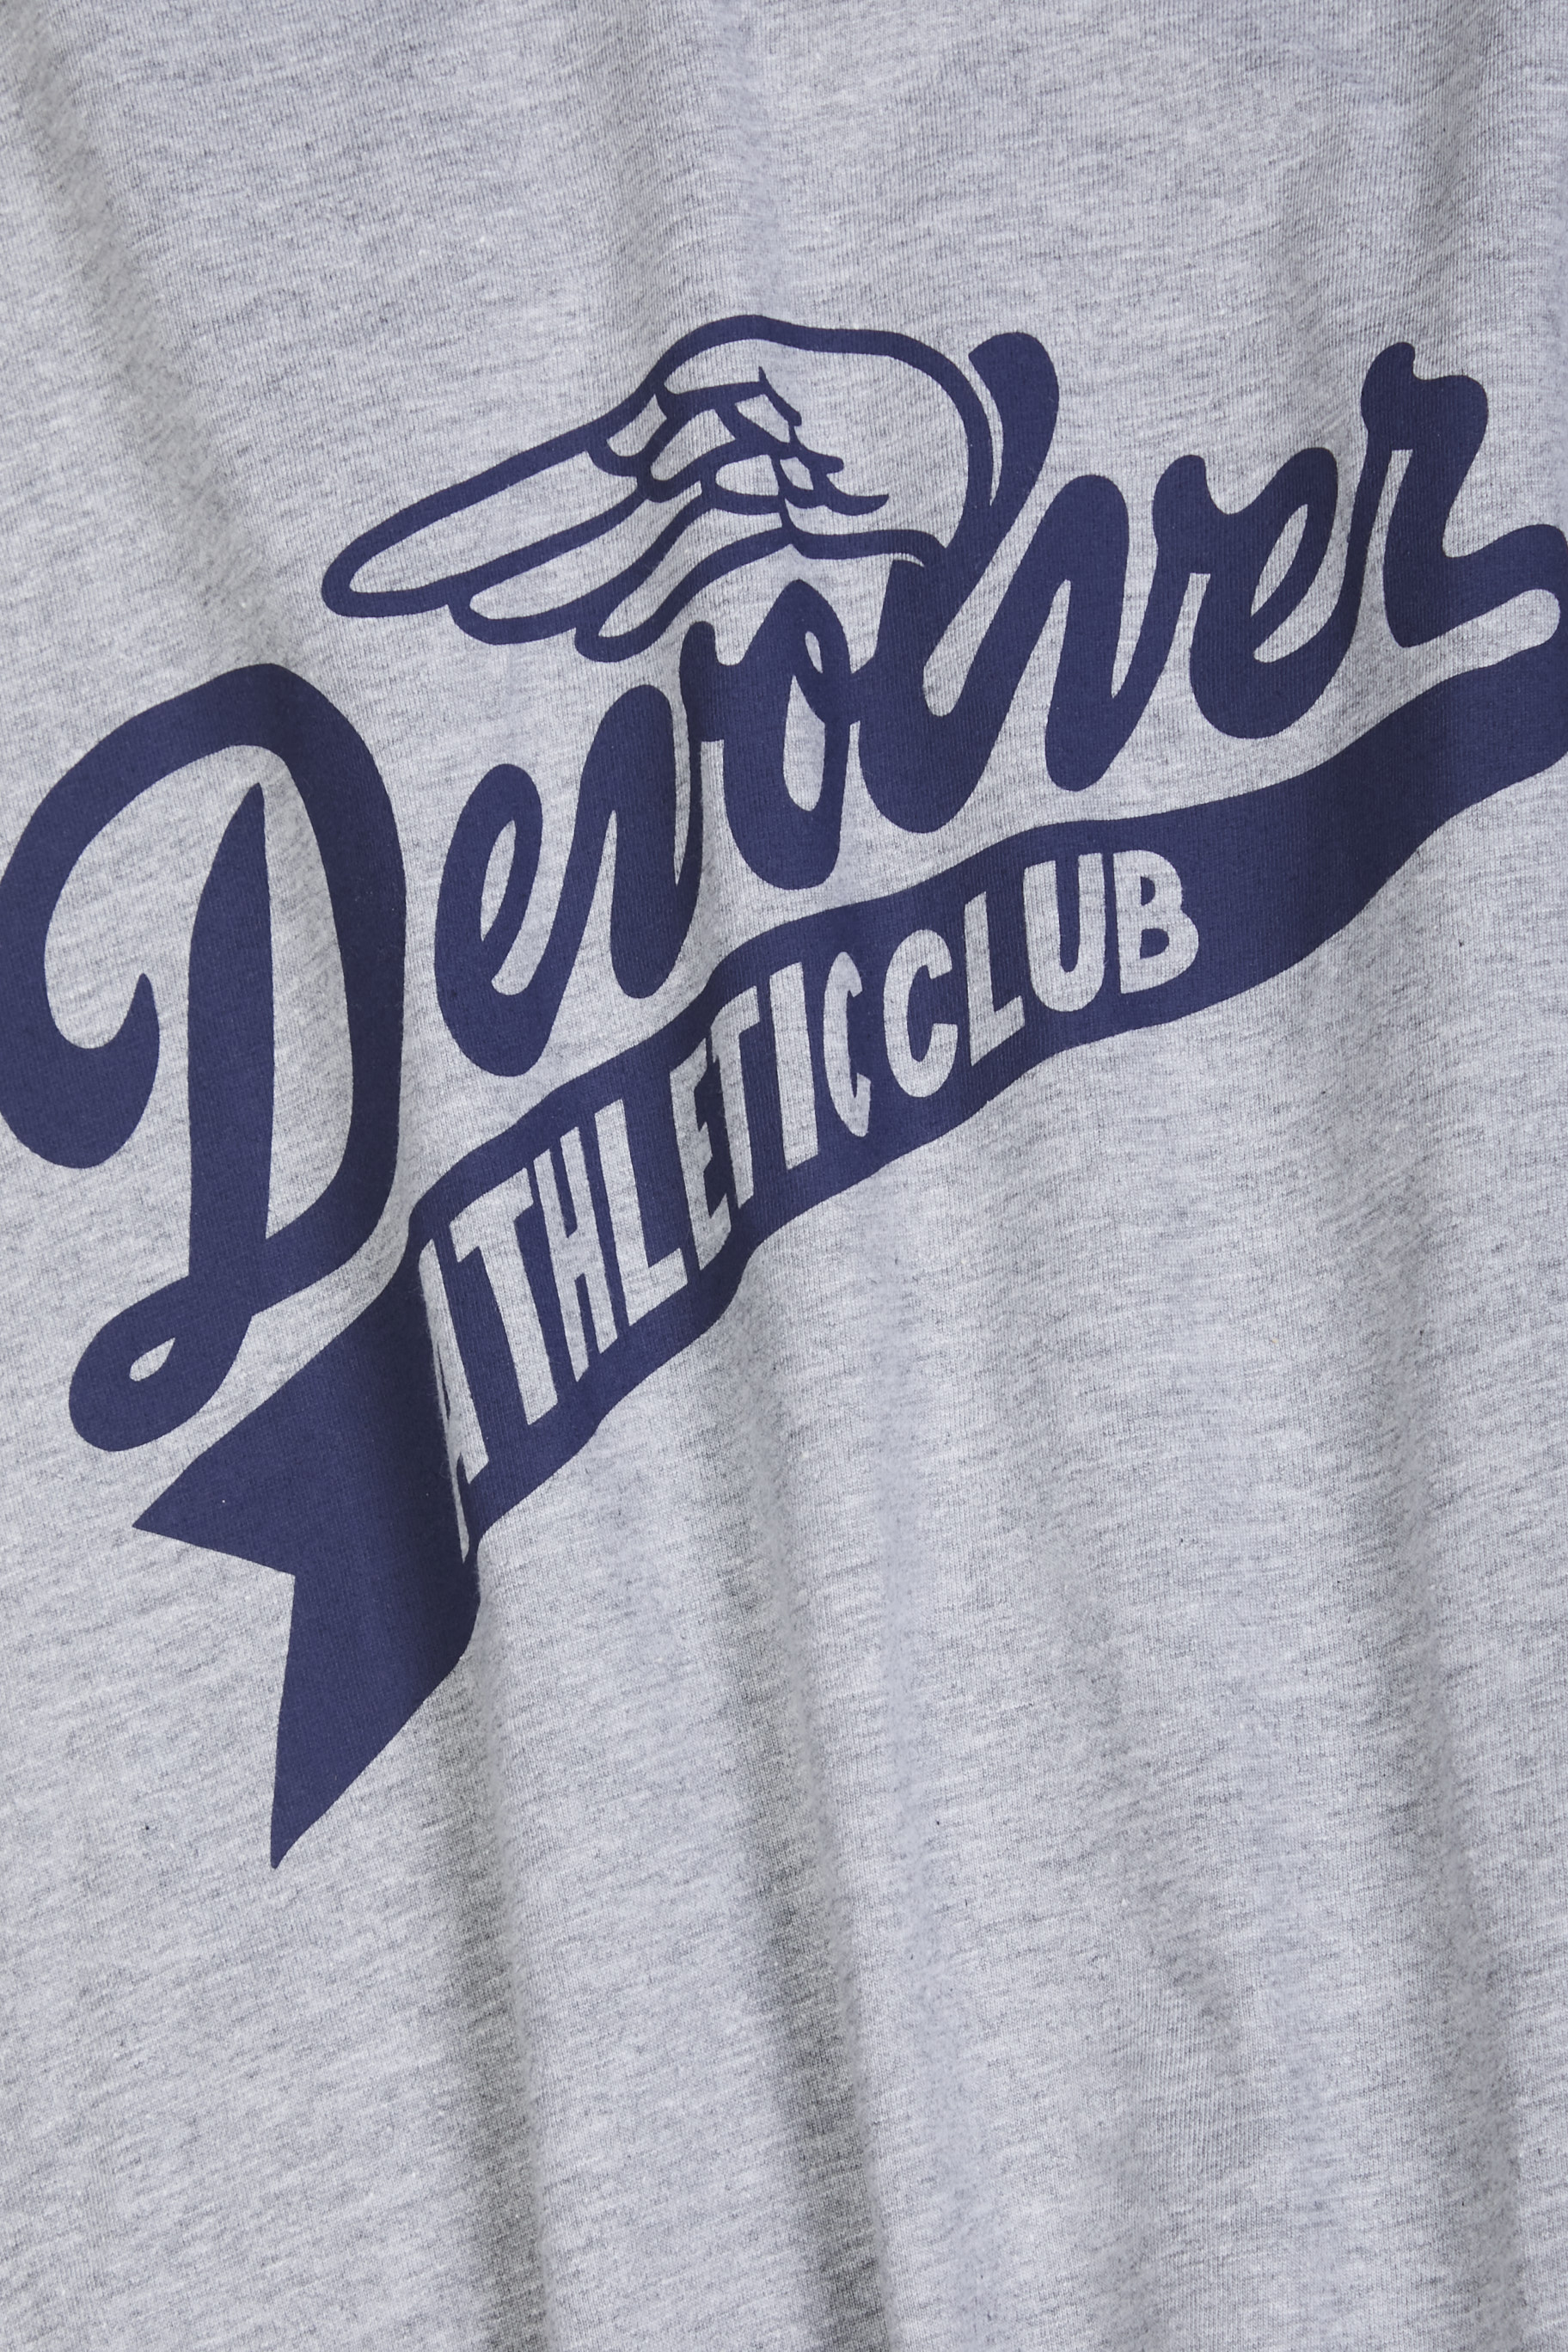 Devolver Digital's Athletic Club Apparel